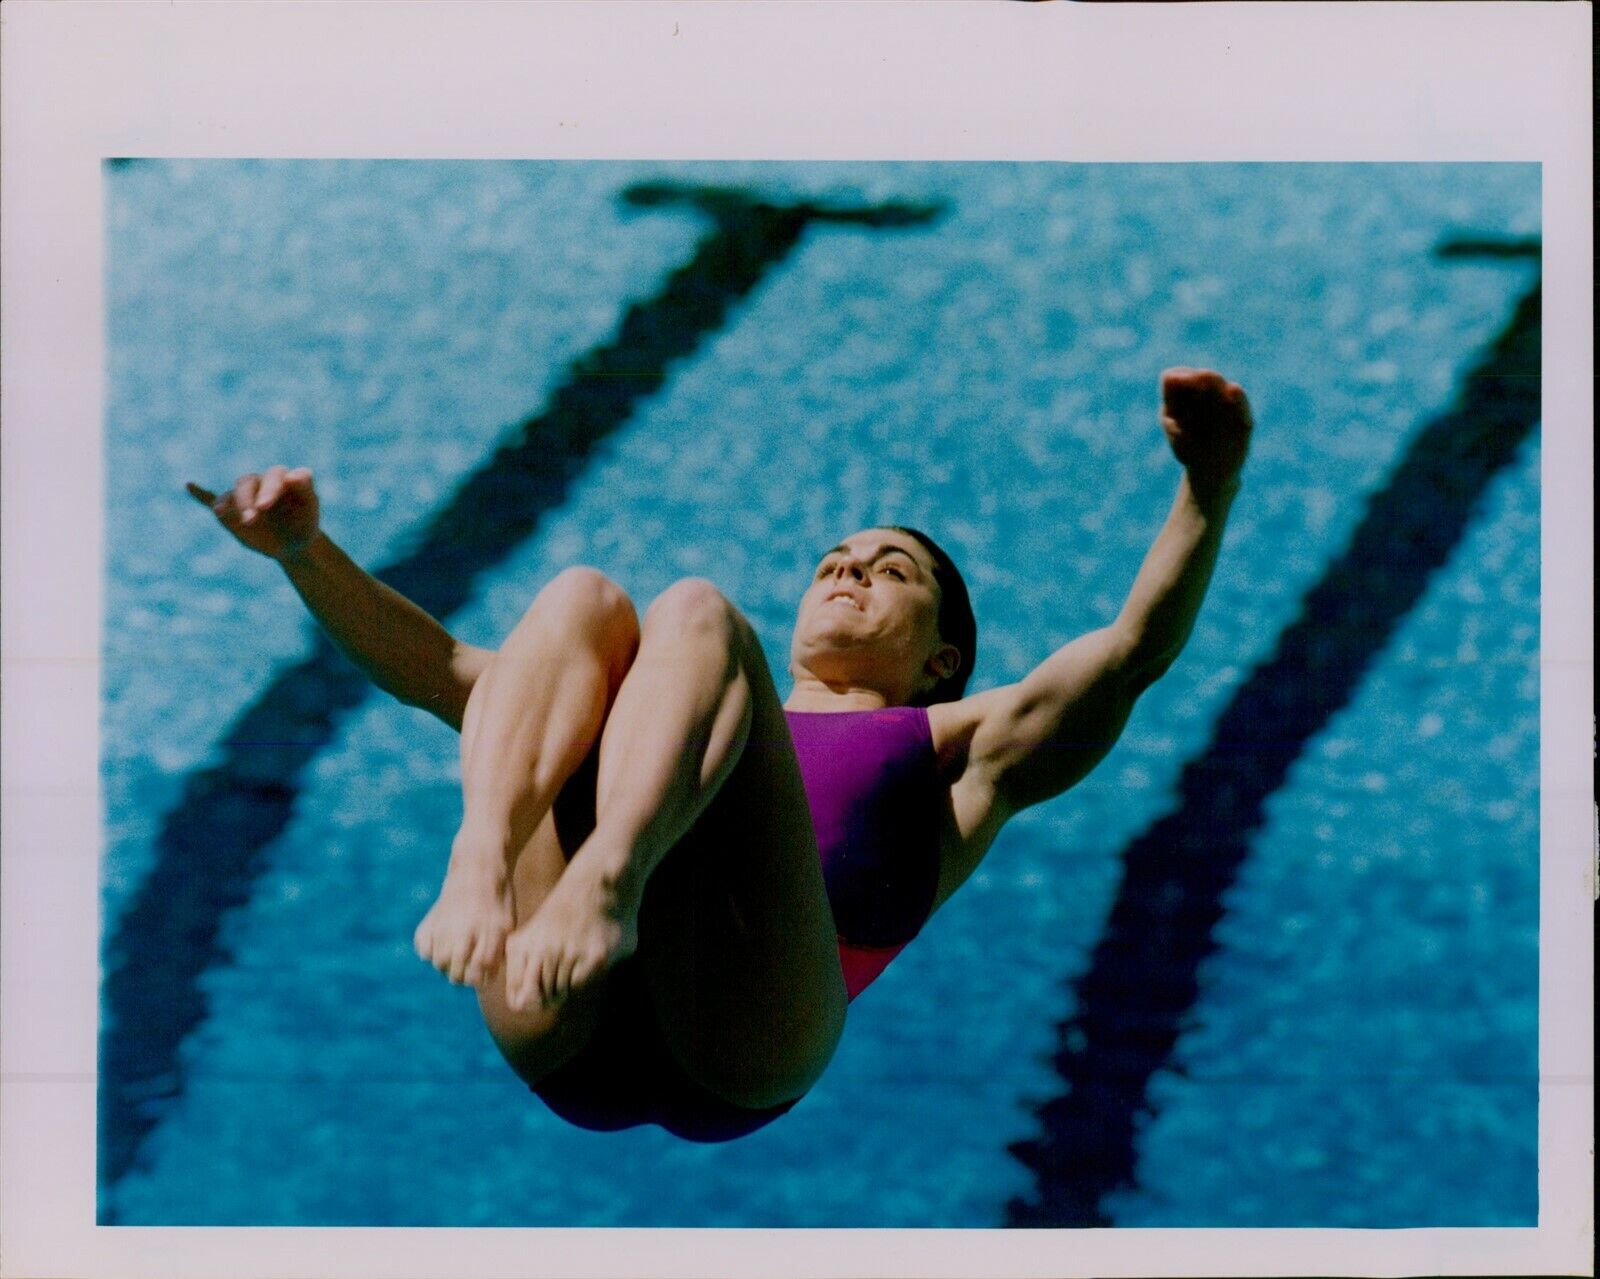 LG790 1991 Original Color Photo BACKFLIP DIVE Fit Female Athlete Tight Swimsuit